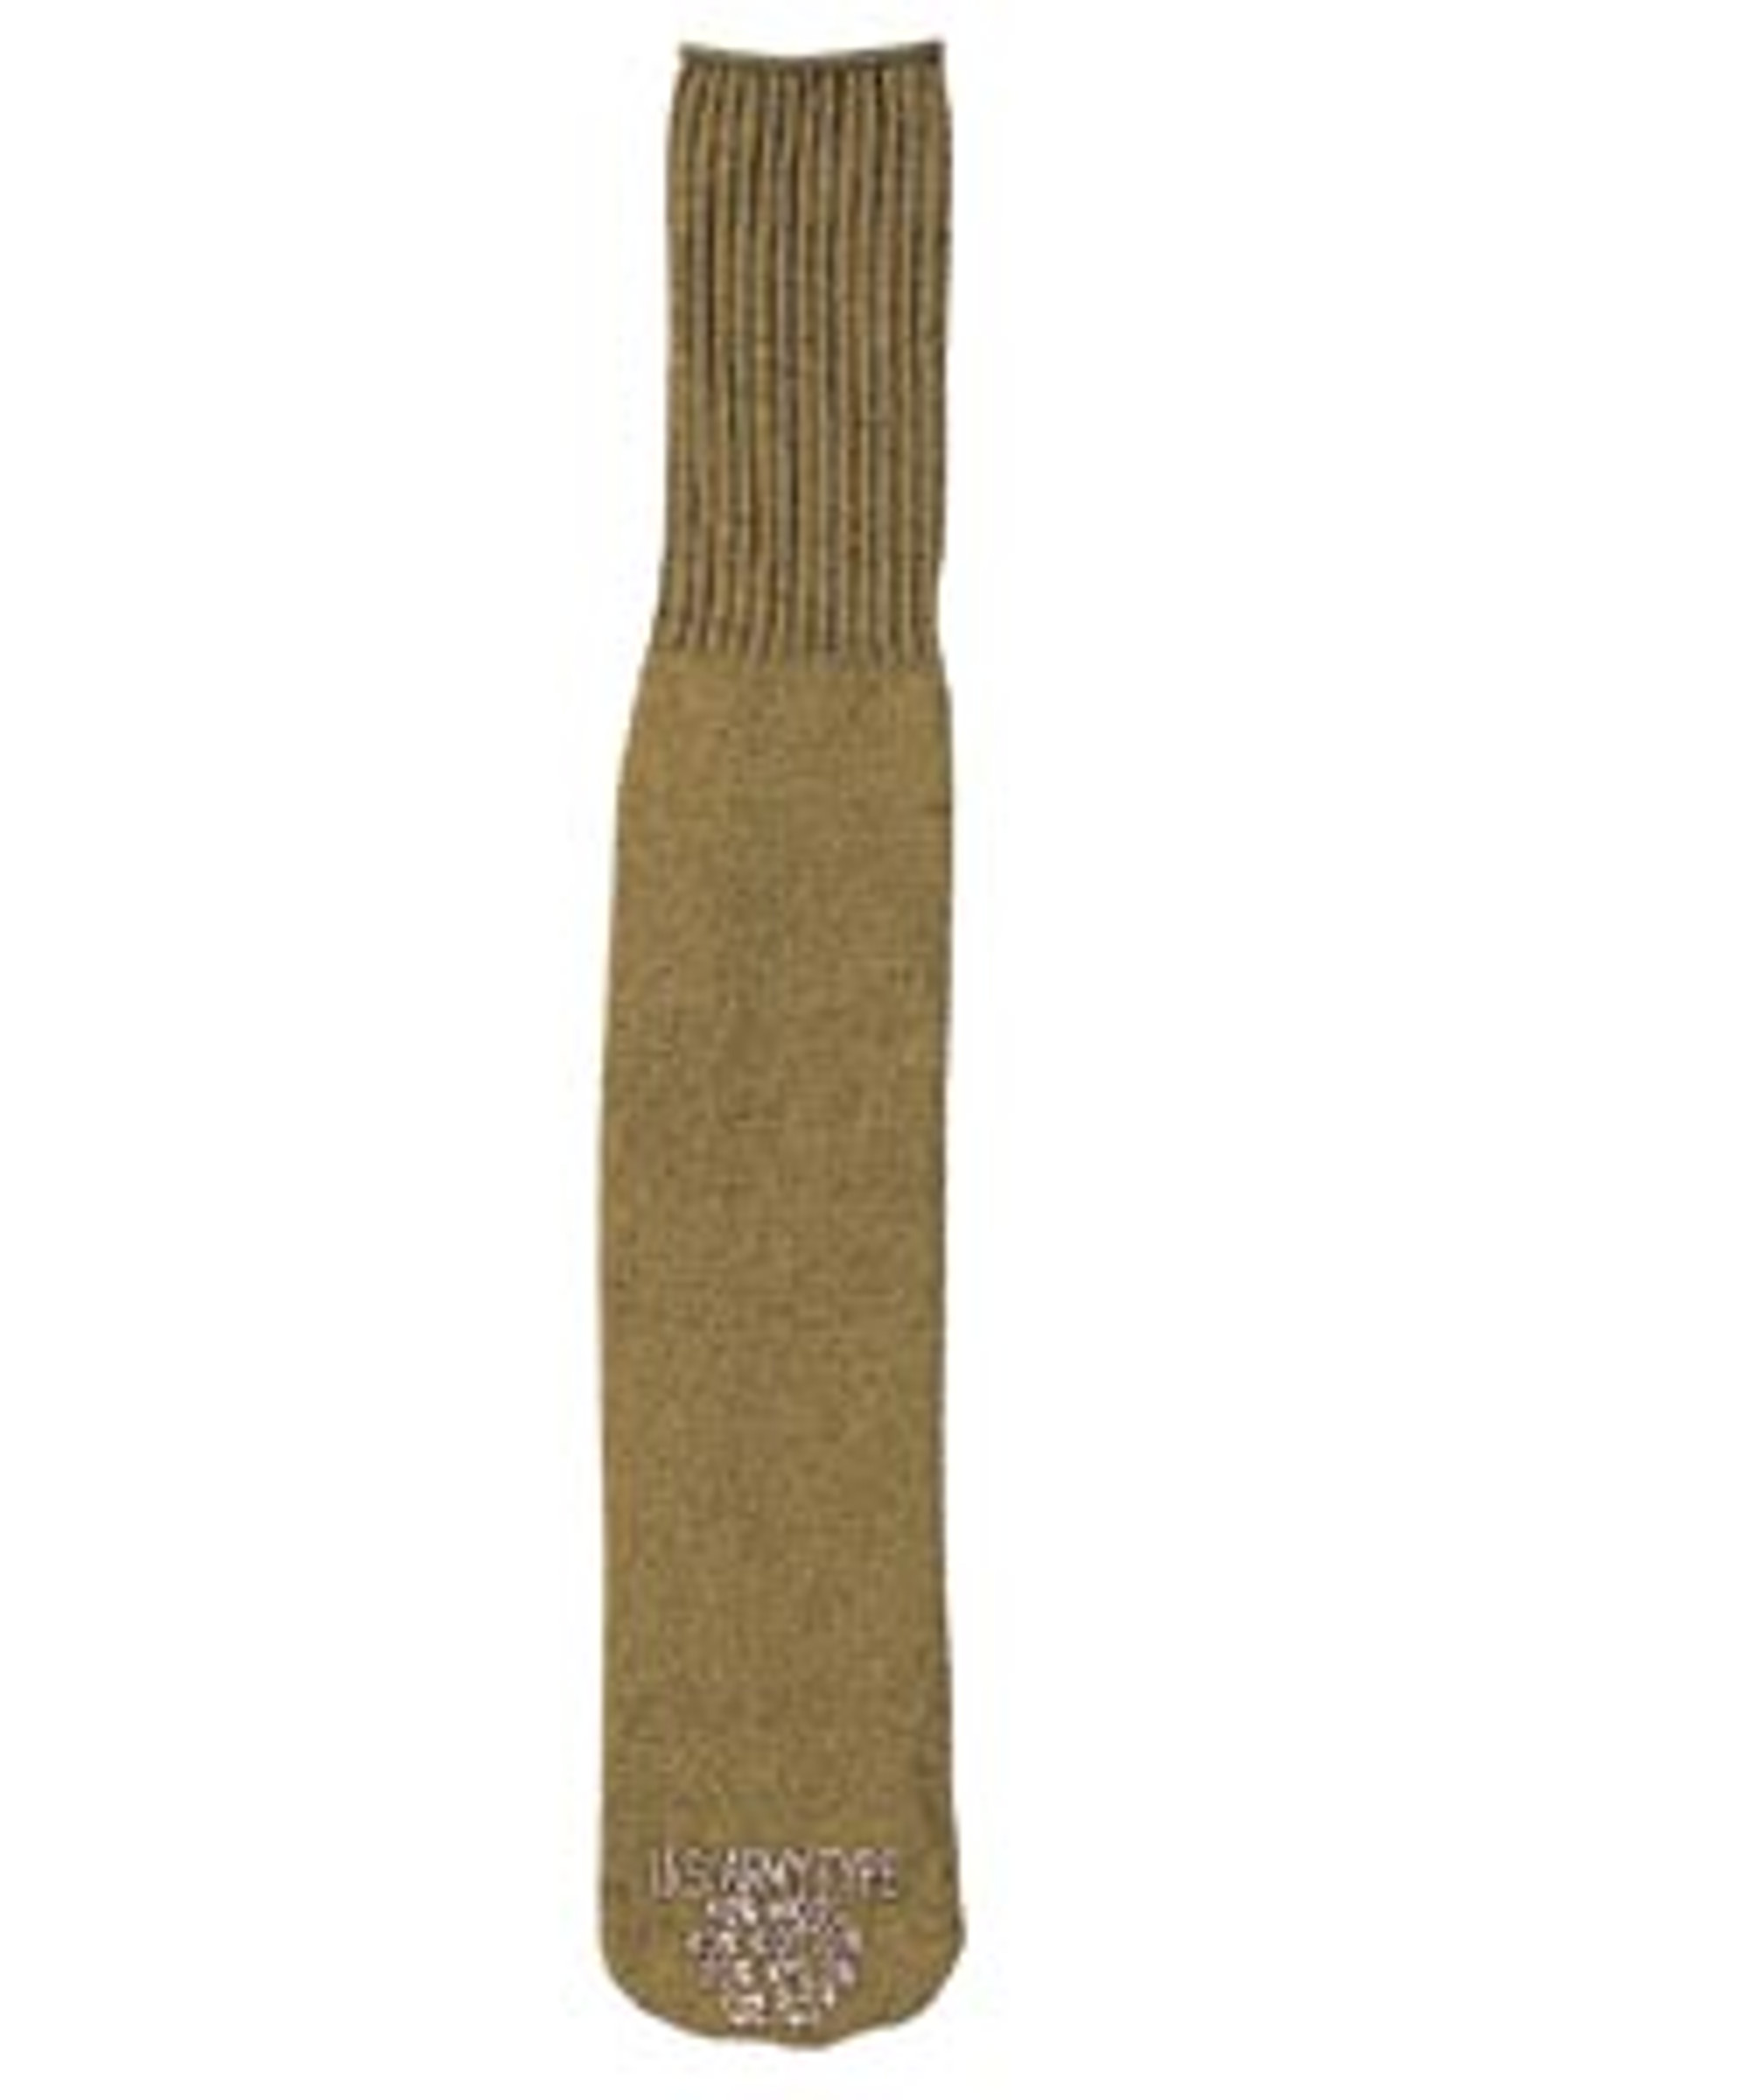 Rothco G.I. Style Tube Socks - Olive Drab